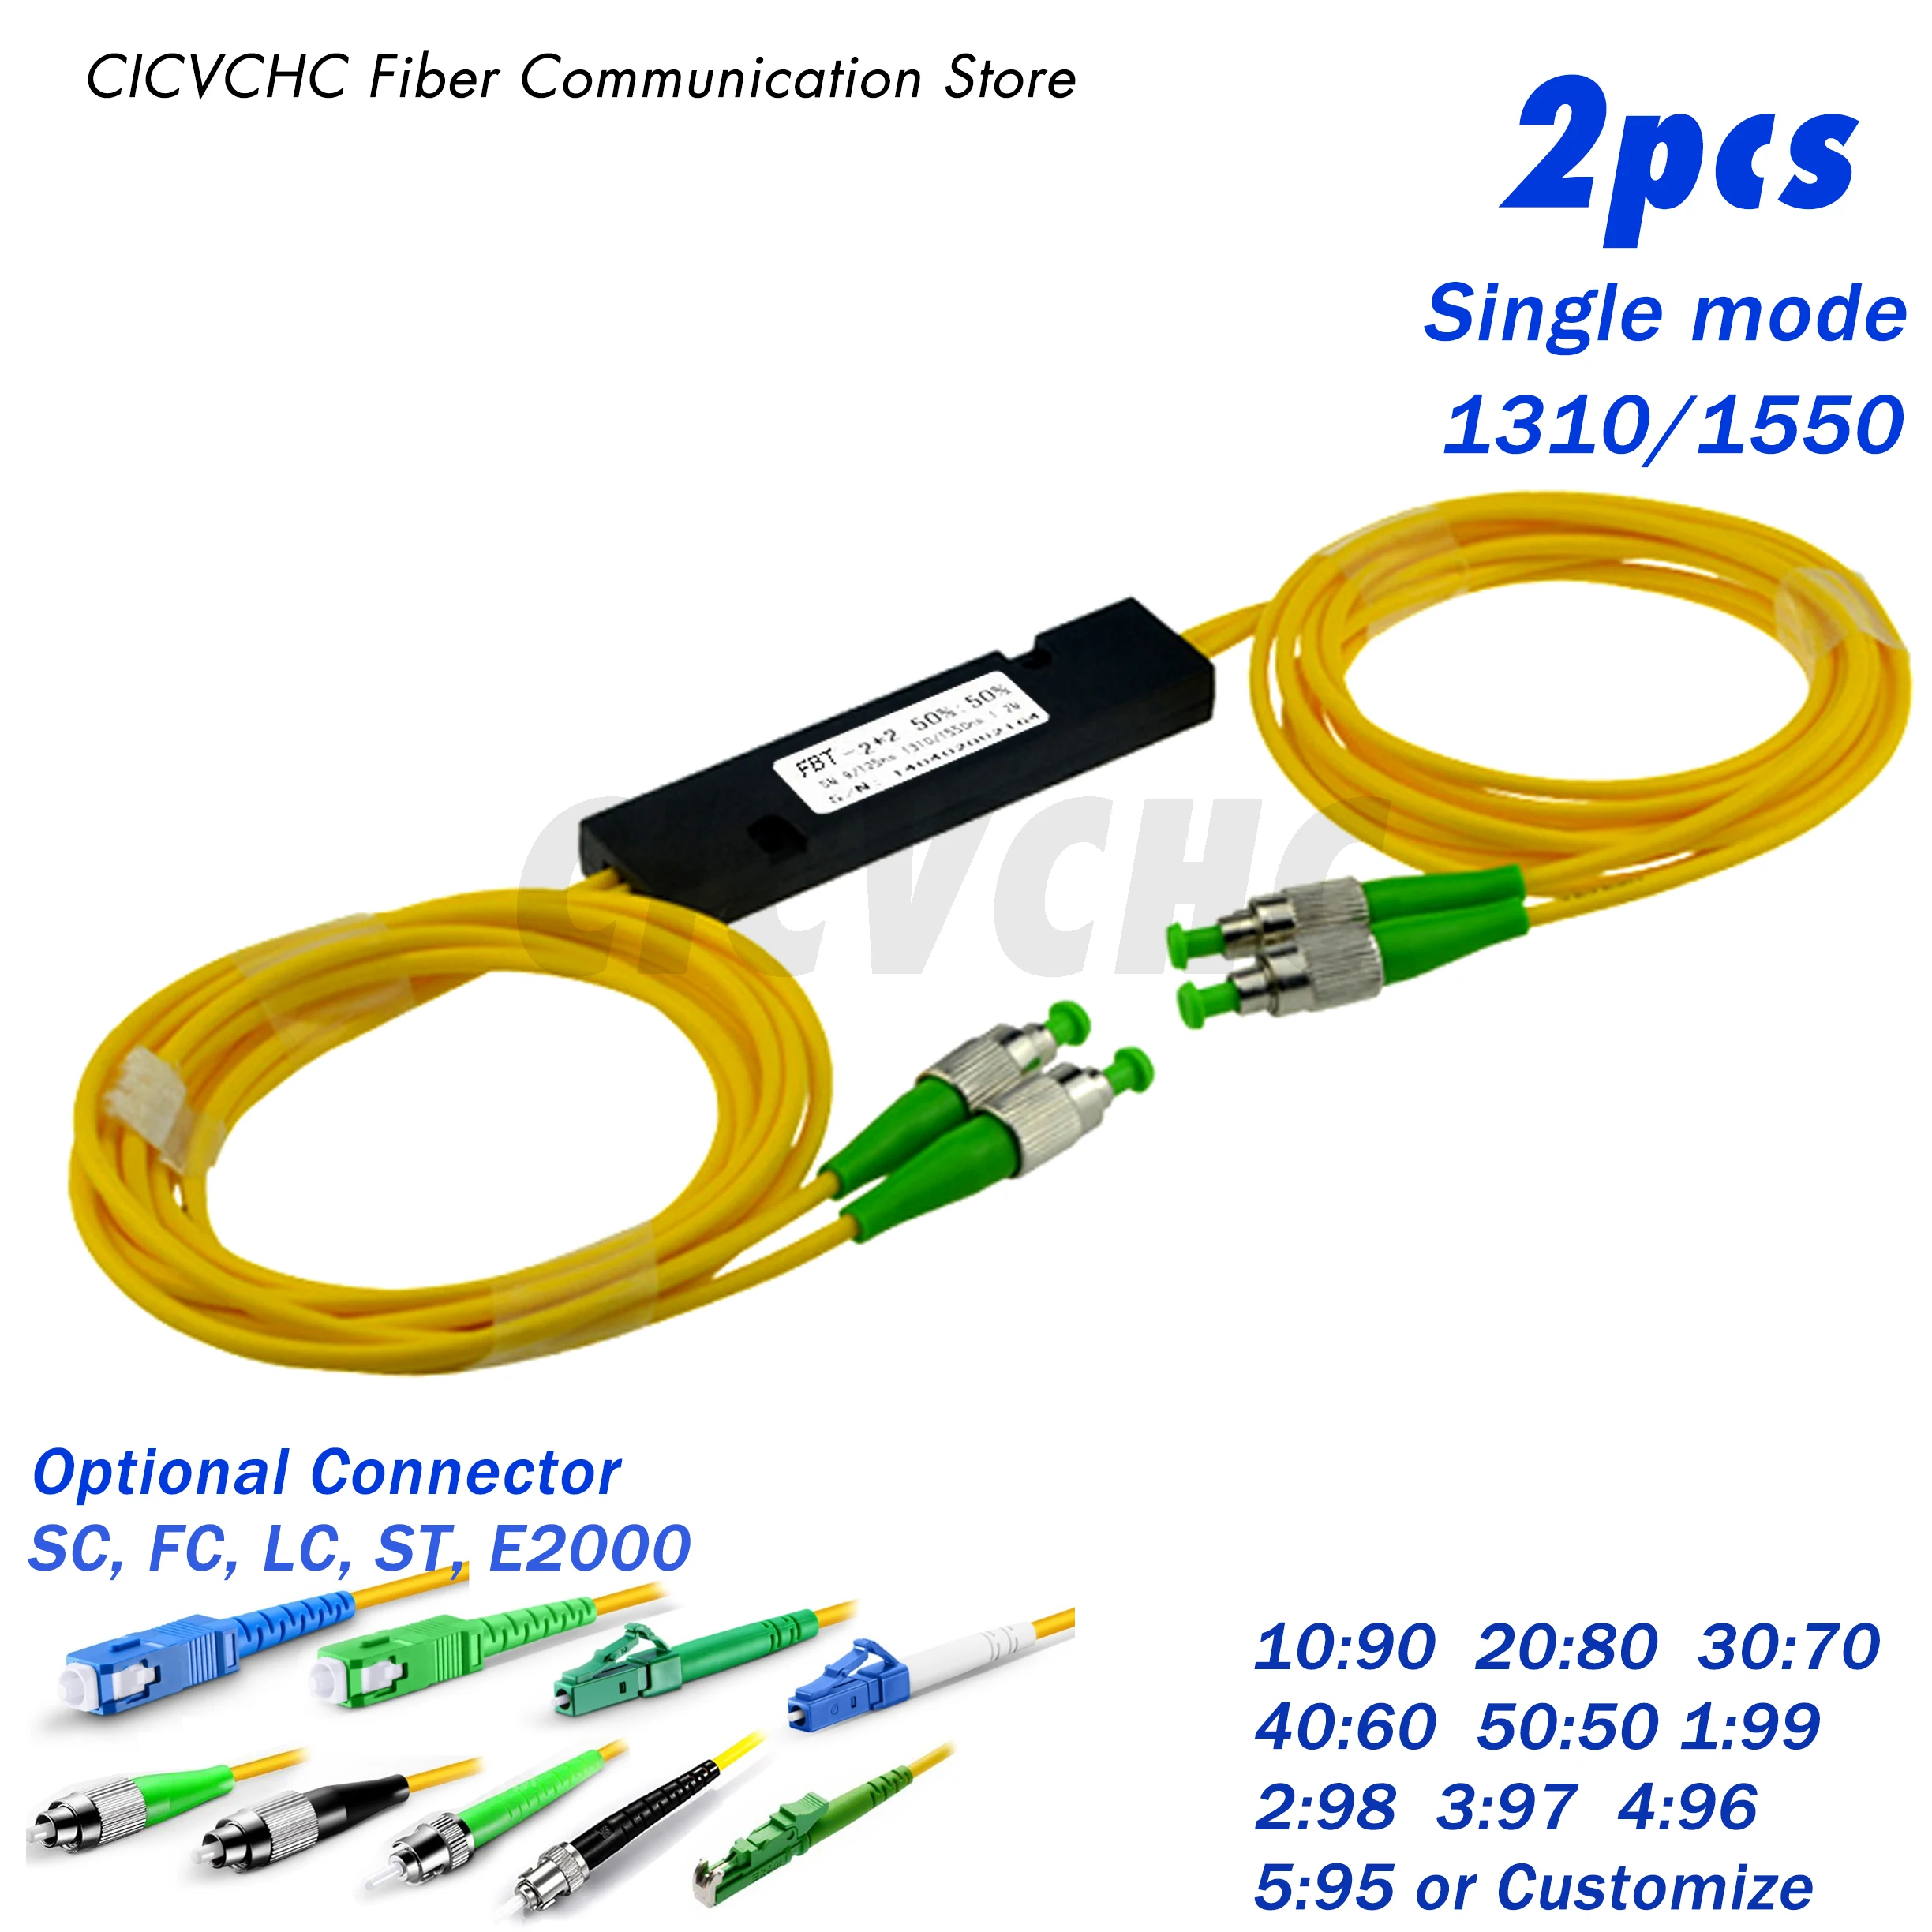 2pcs 2X2 FBT Coupler, Single mode 1310/1550nm, ABS 3.0mm Loose Tube, -SC, FC, LC - 0.5m/Optical Fiber Coupler